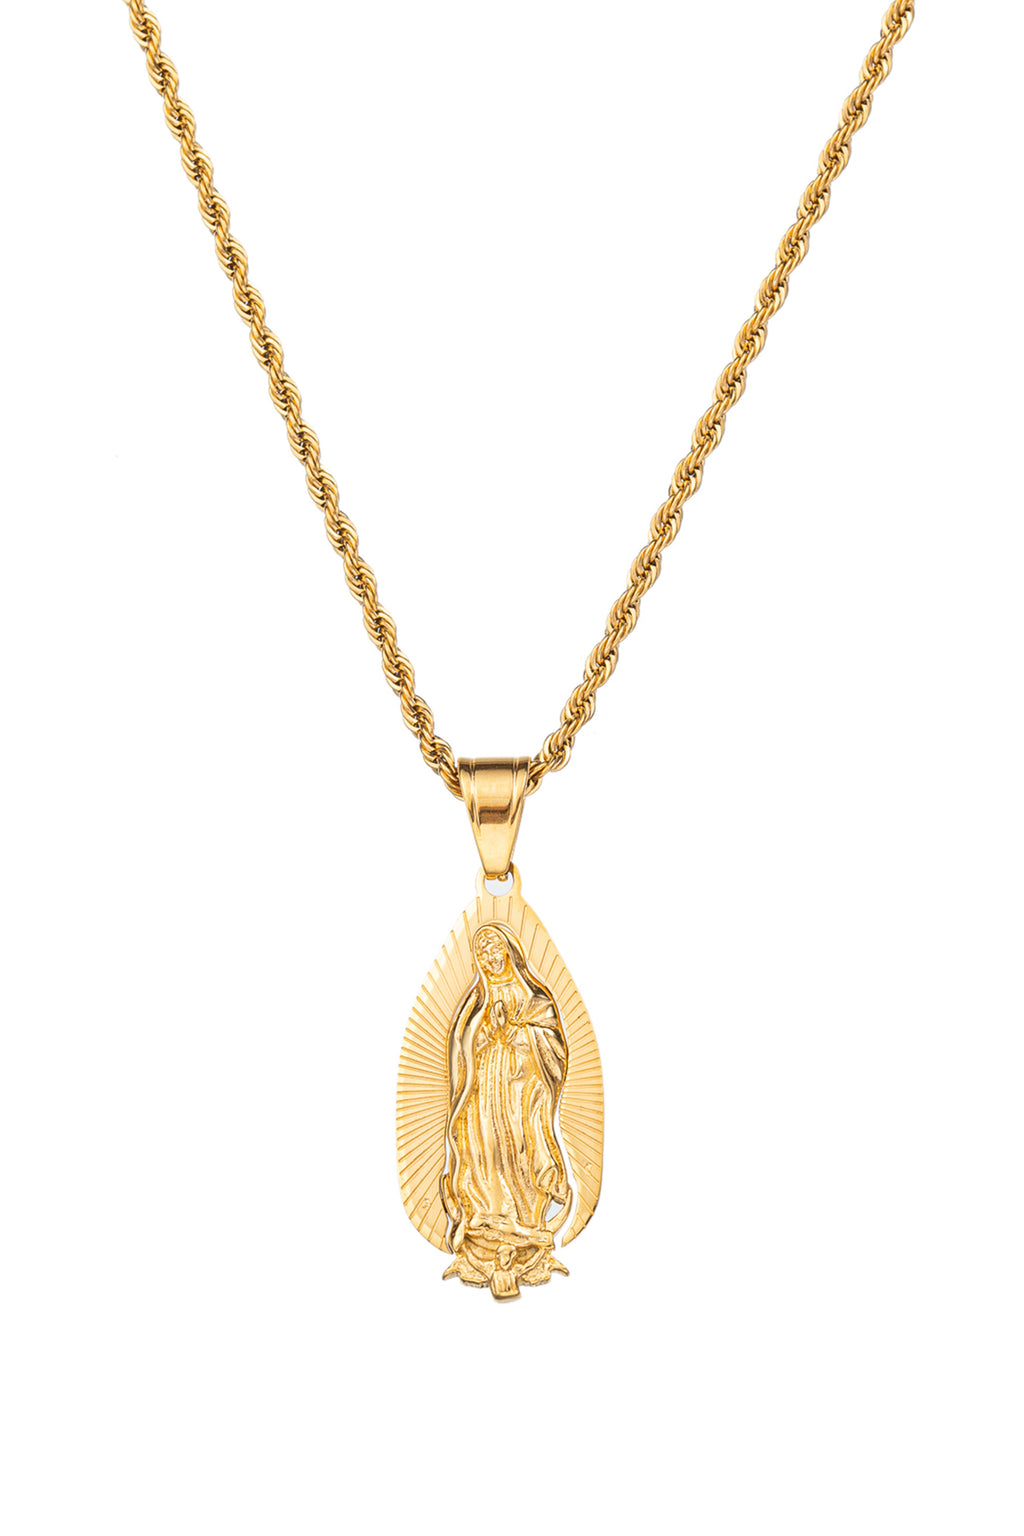 Gold tone titanium Virgin Mary pendant necklace.